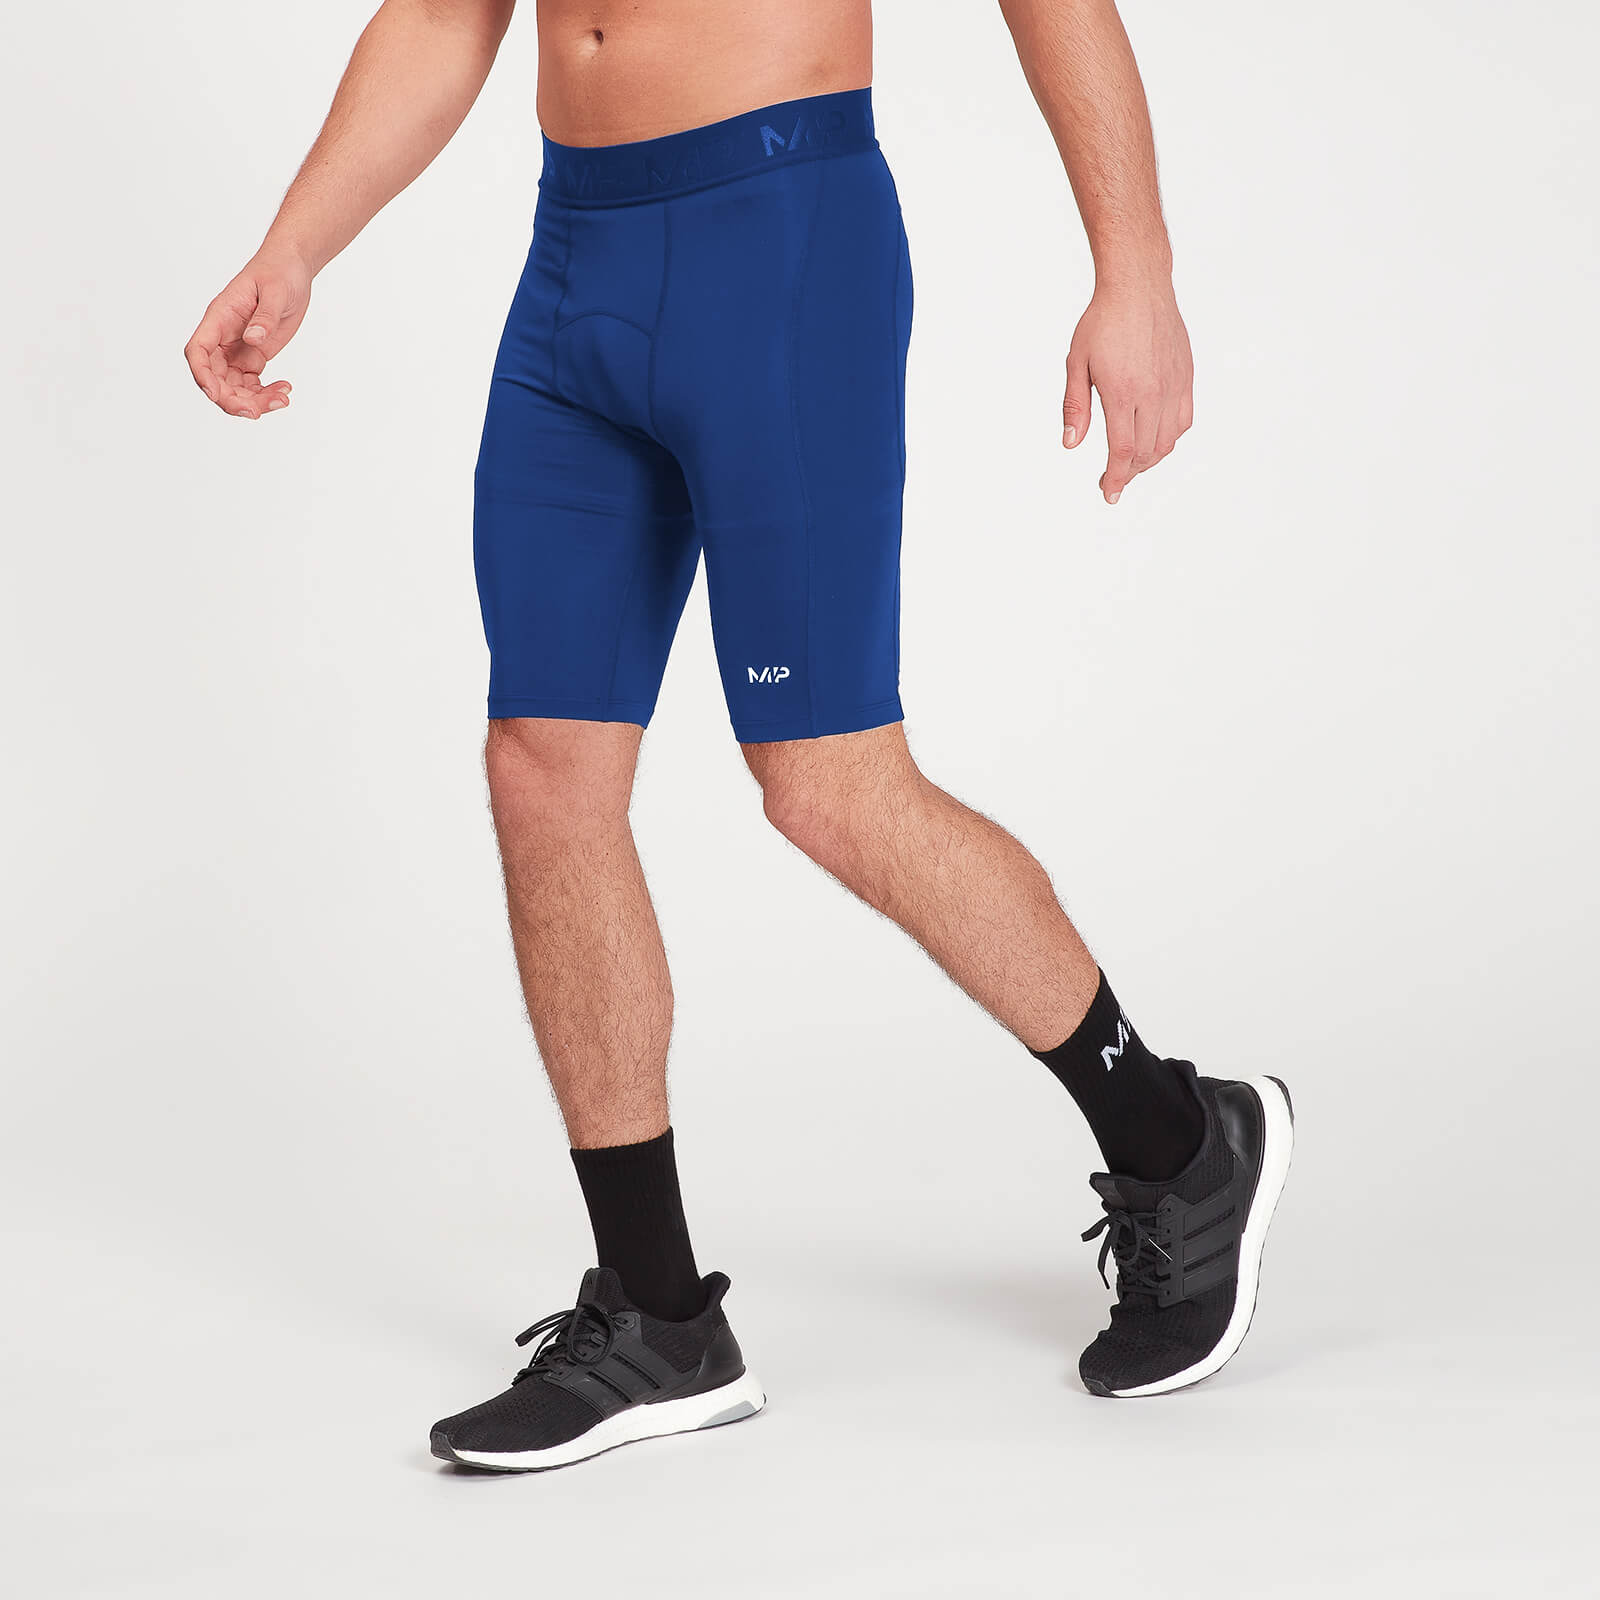 Pantalón corto interior de deporte de entrenamiento para hombre de MP - Azul intenso - XS